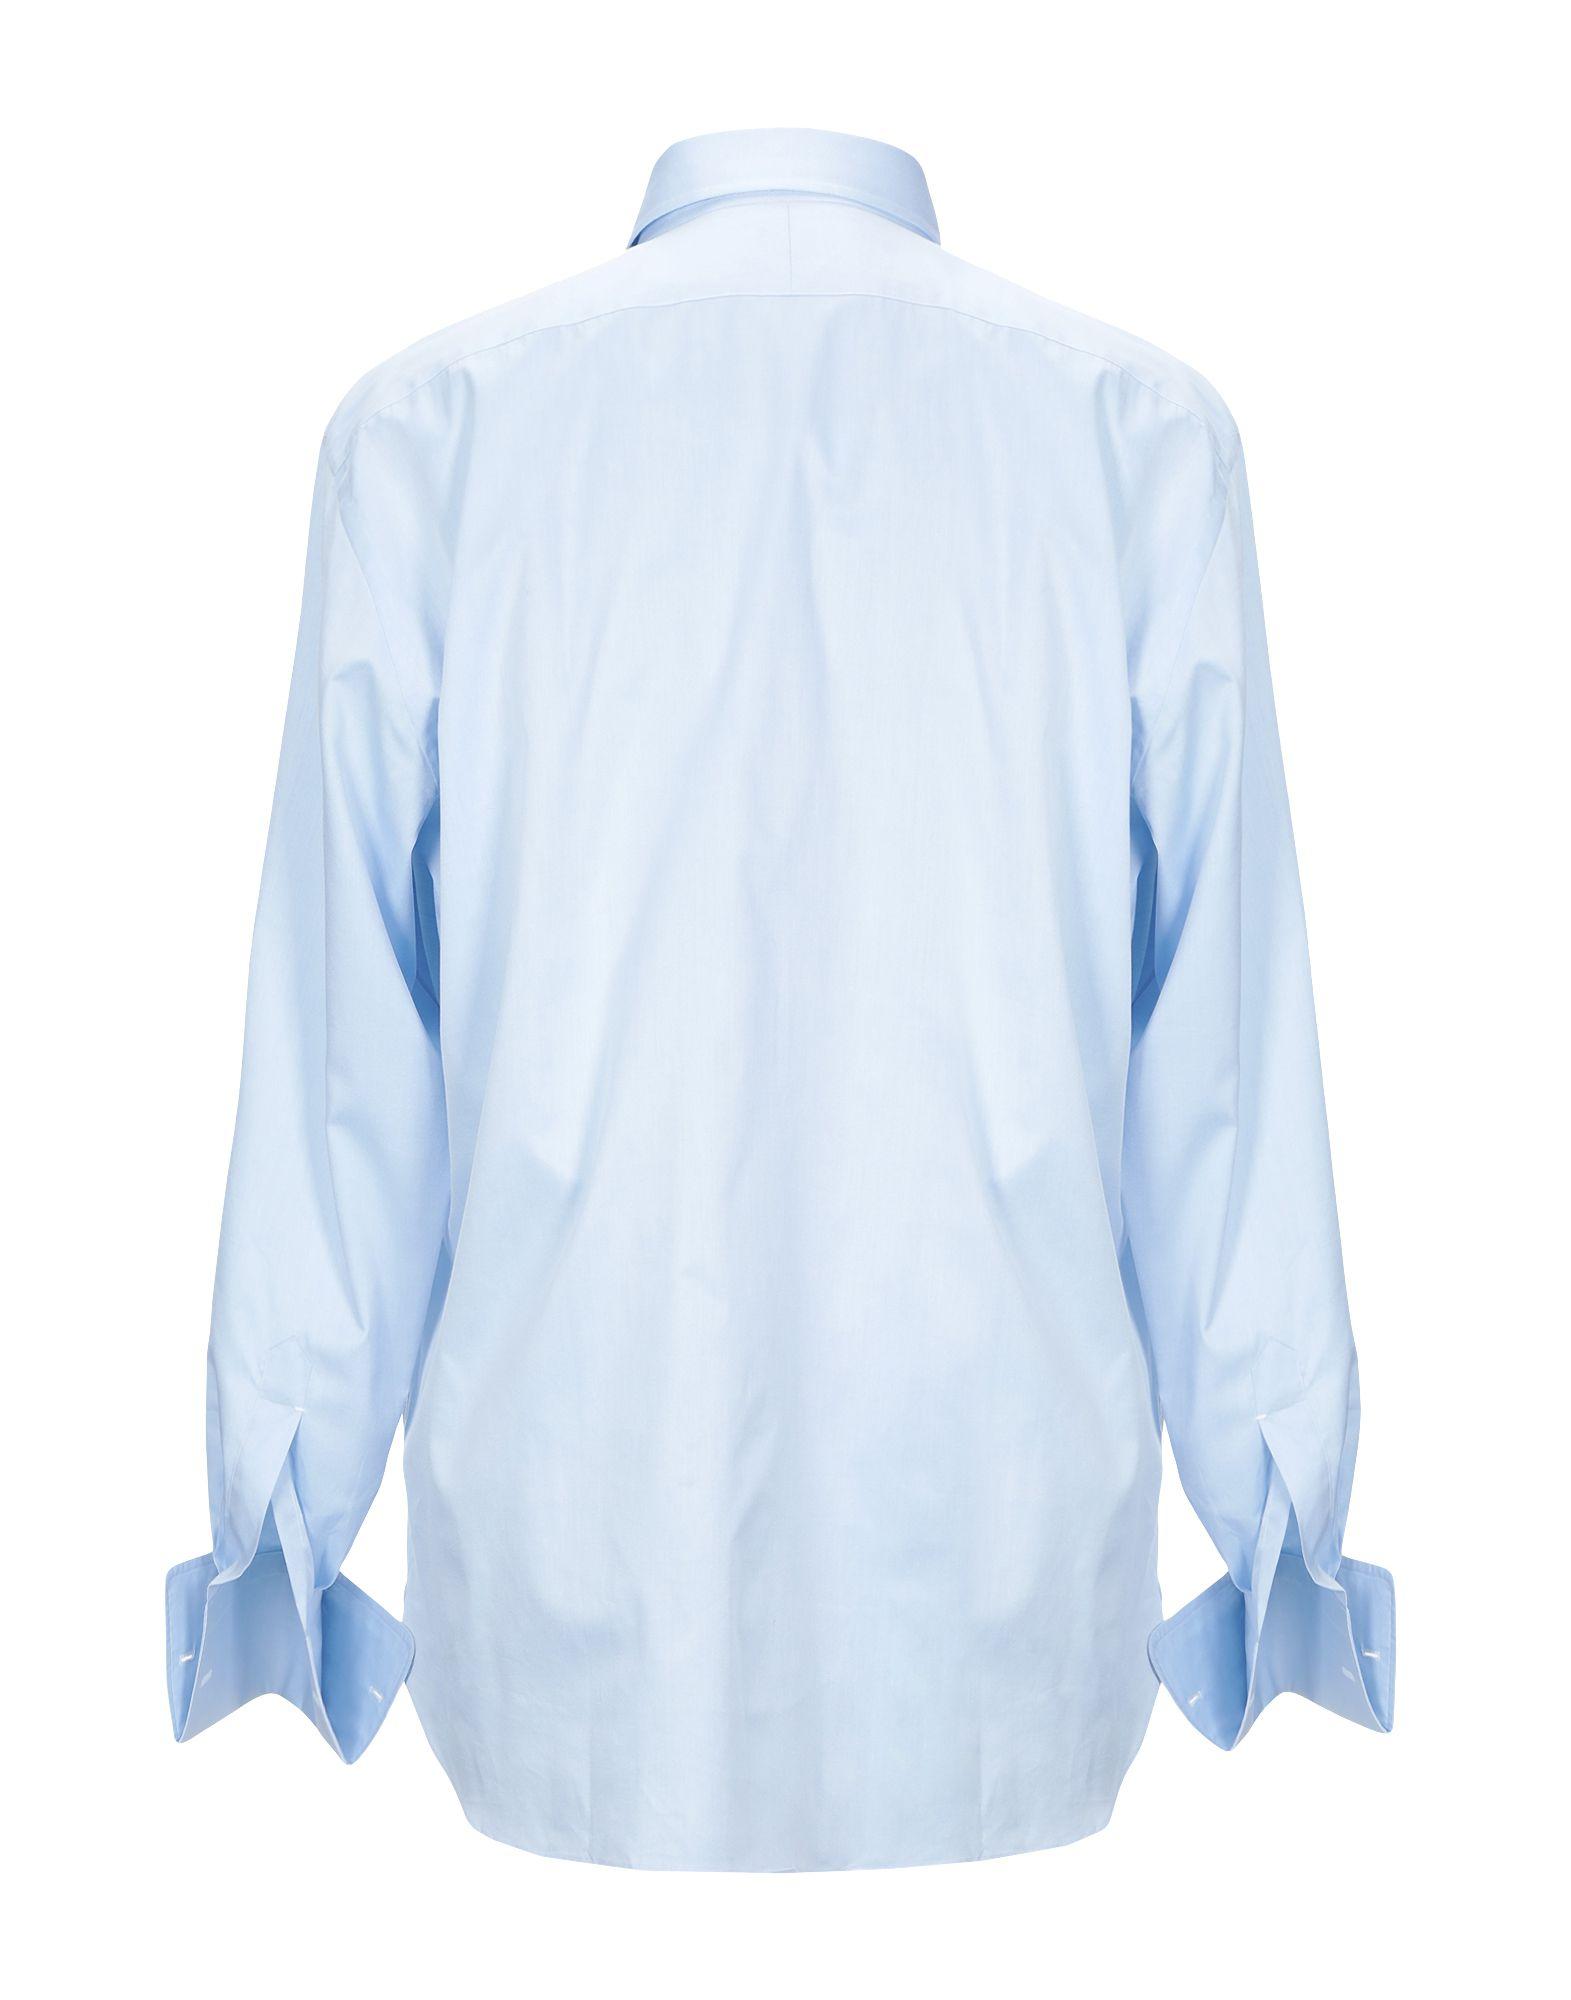 Truzzi Cotton Shirt in Sky Blue (Blue) for Men - Lyst